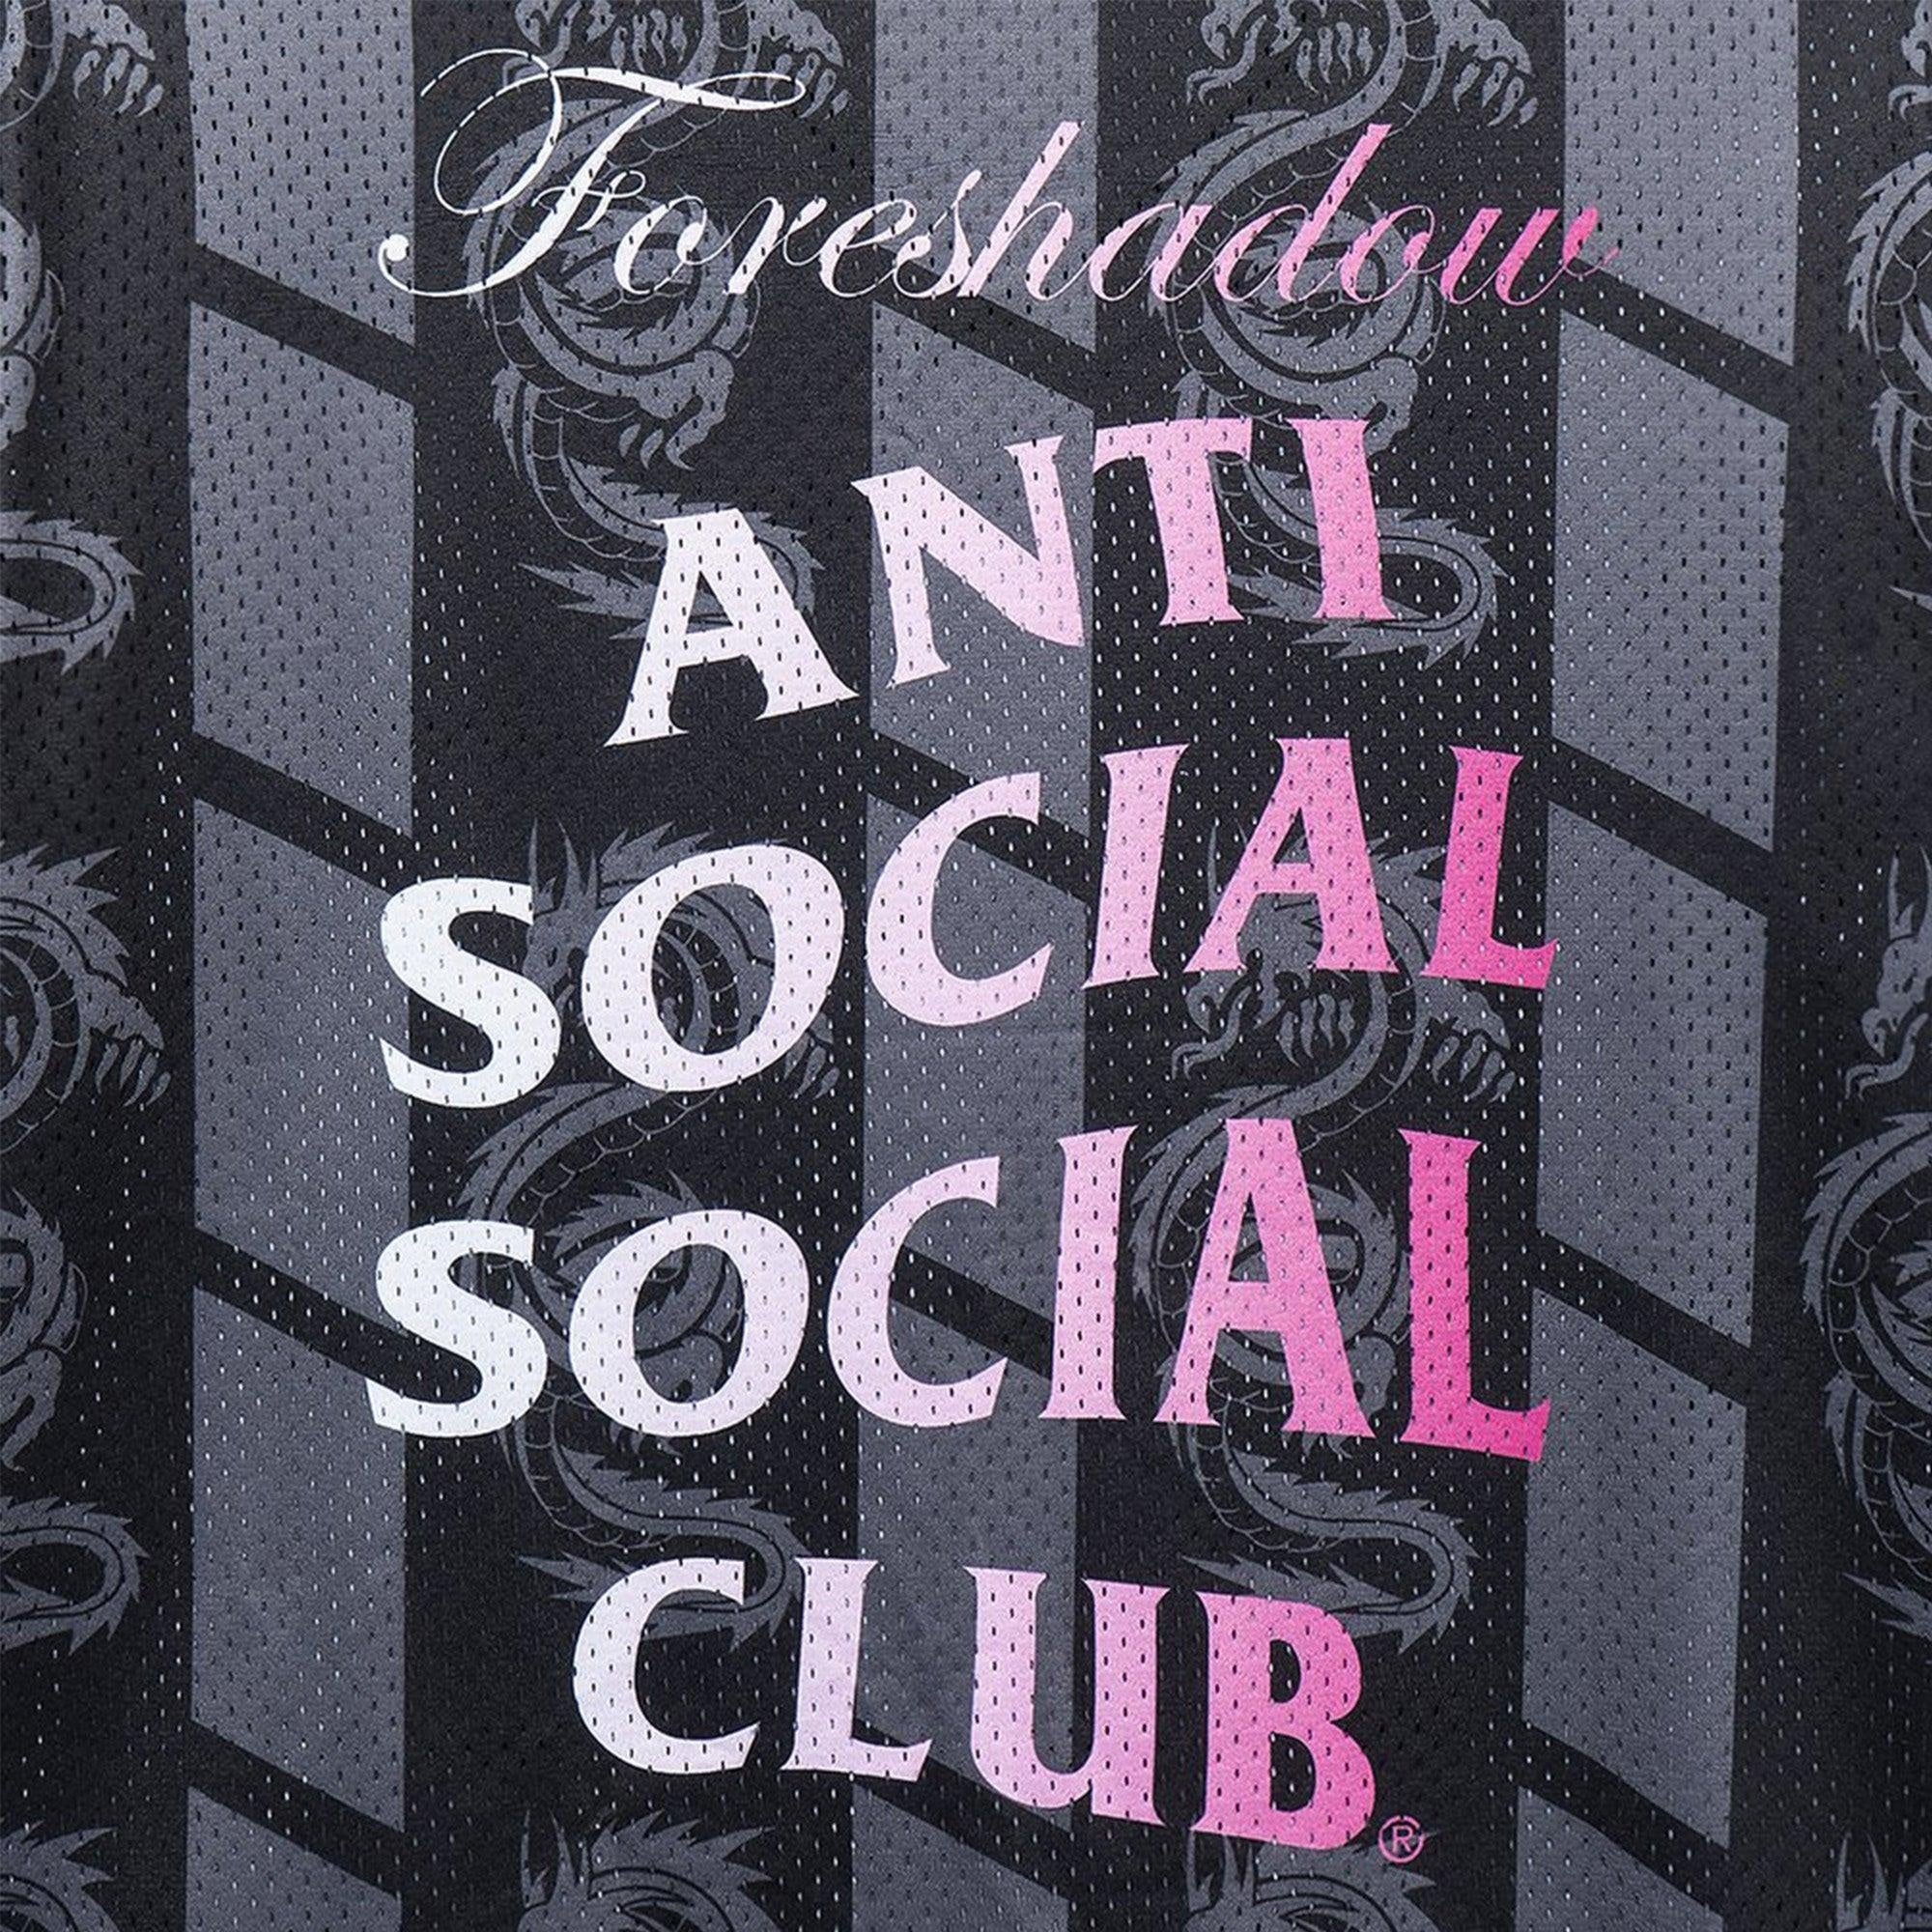 Buy Anti Social Social Club Foreshadow United Black Pink Jersey Online